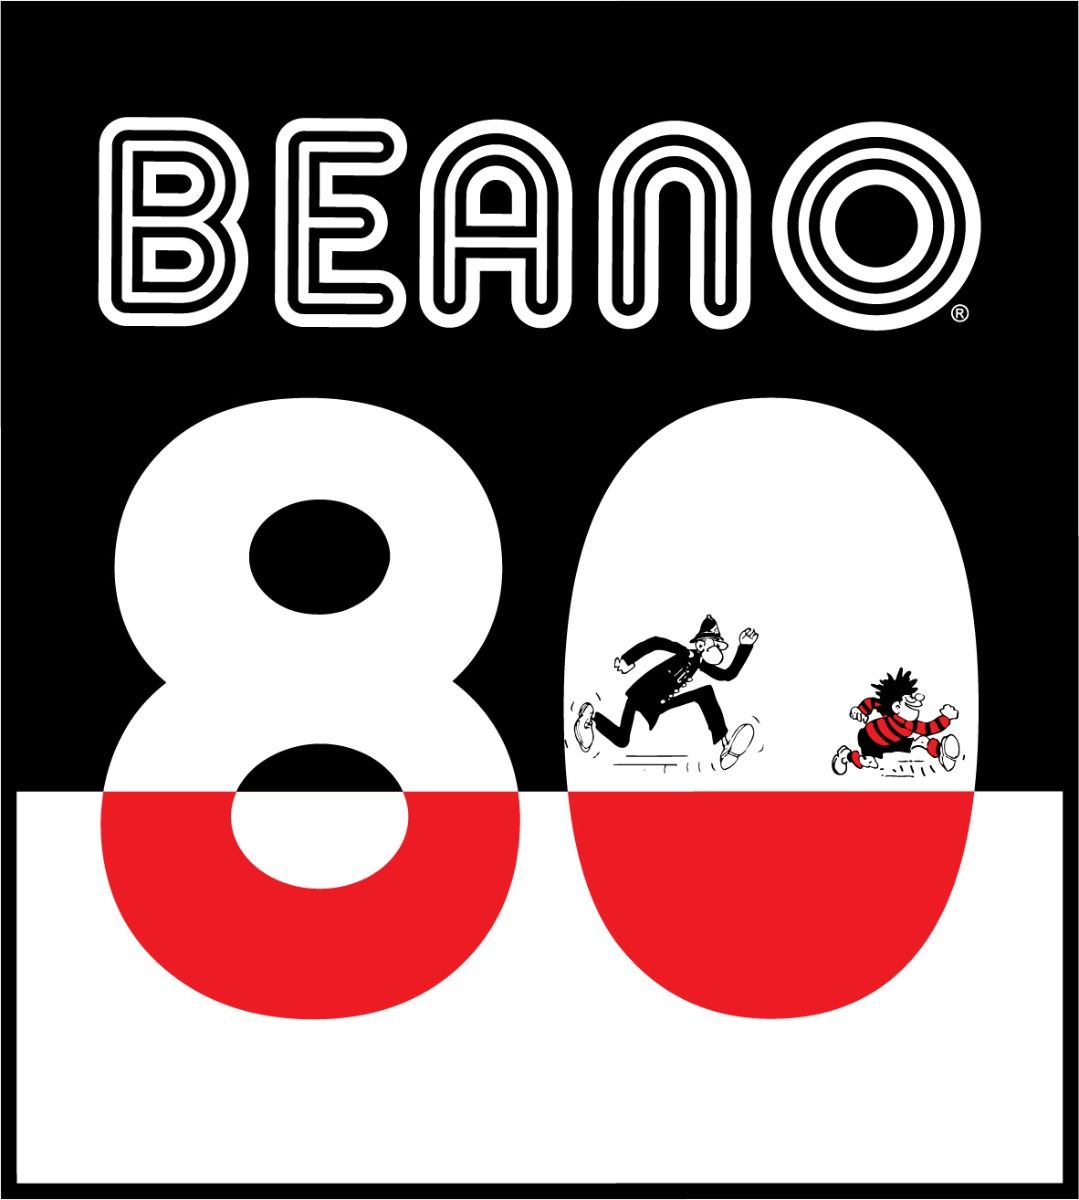 Beano at 80 - Logo